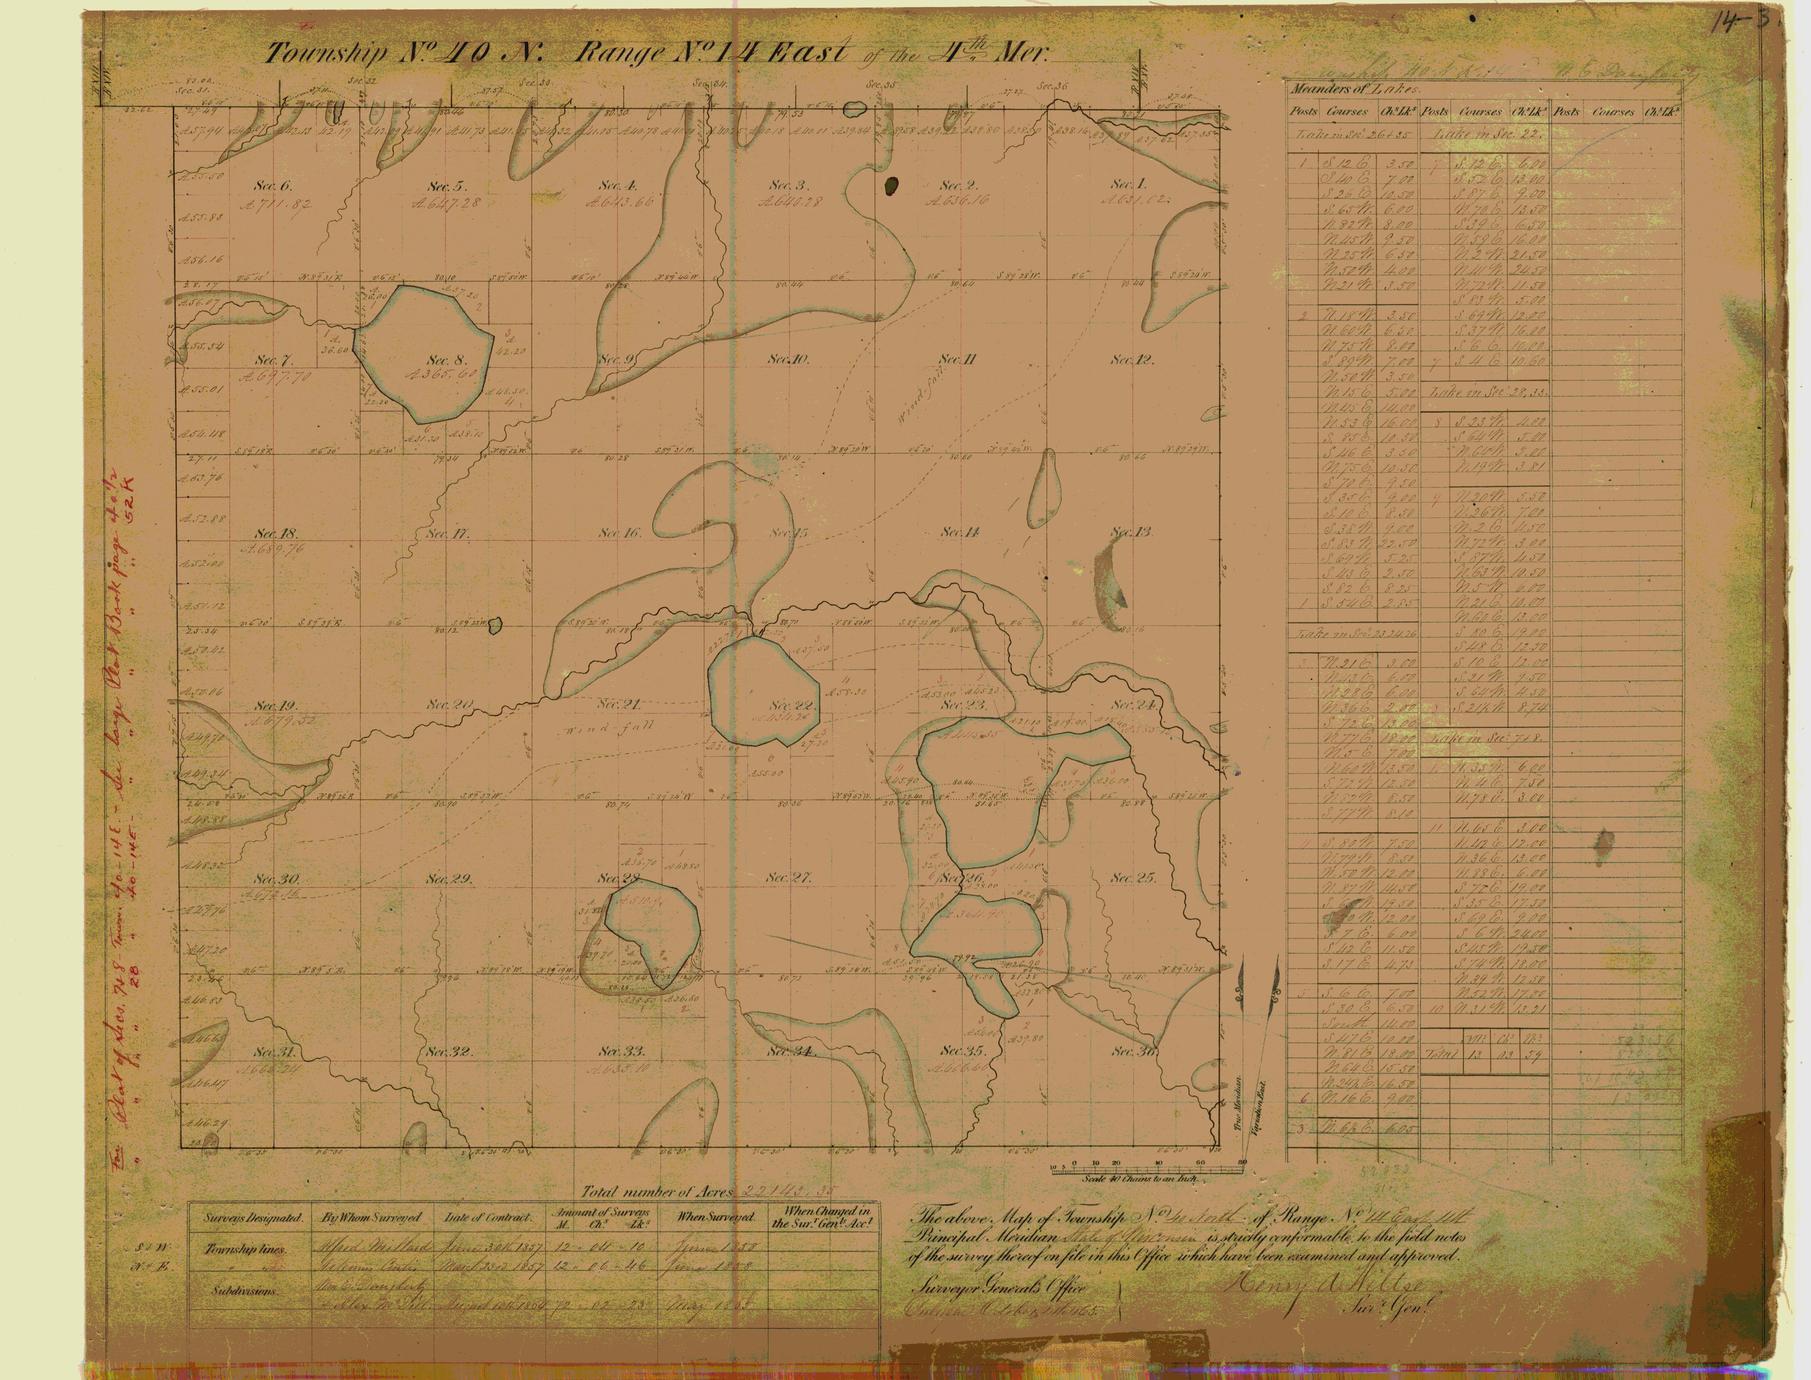 [Public Land Survey System map: Wisconsin Township 40 North, Range 14 East]